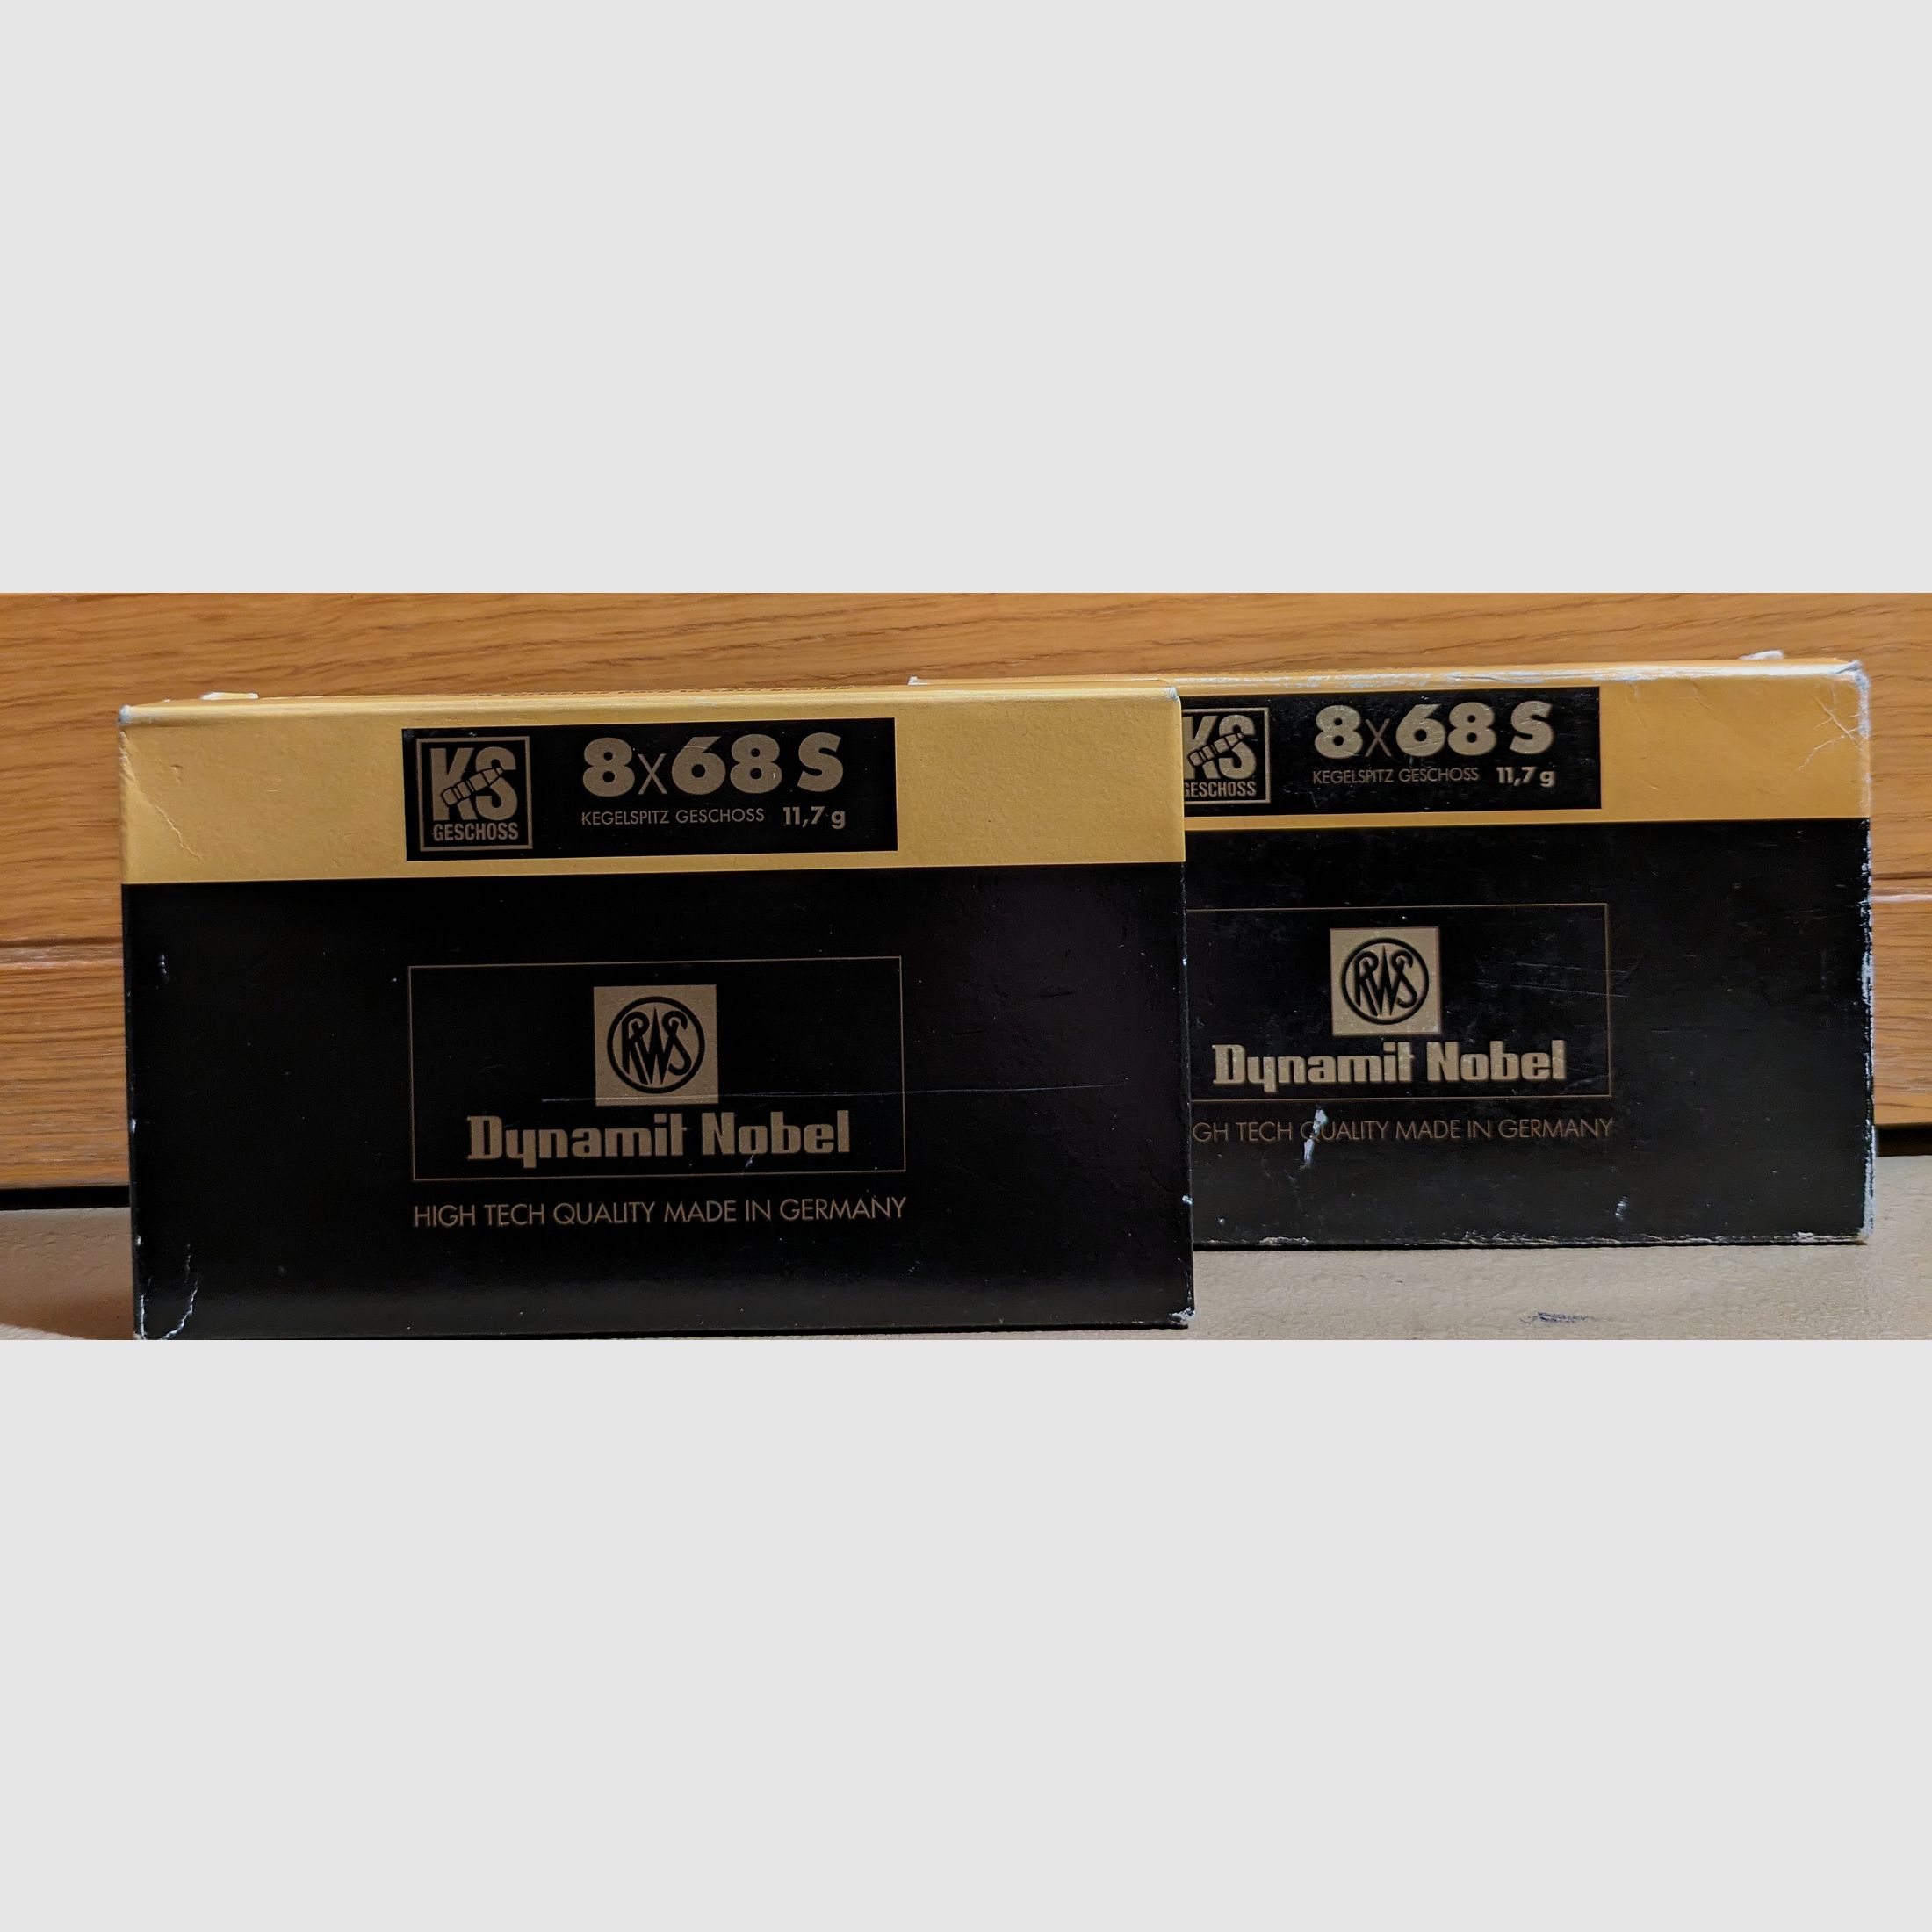 2 Schachteln RWS 8x68S mit 11,7 gramm KS Geschoß